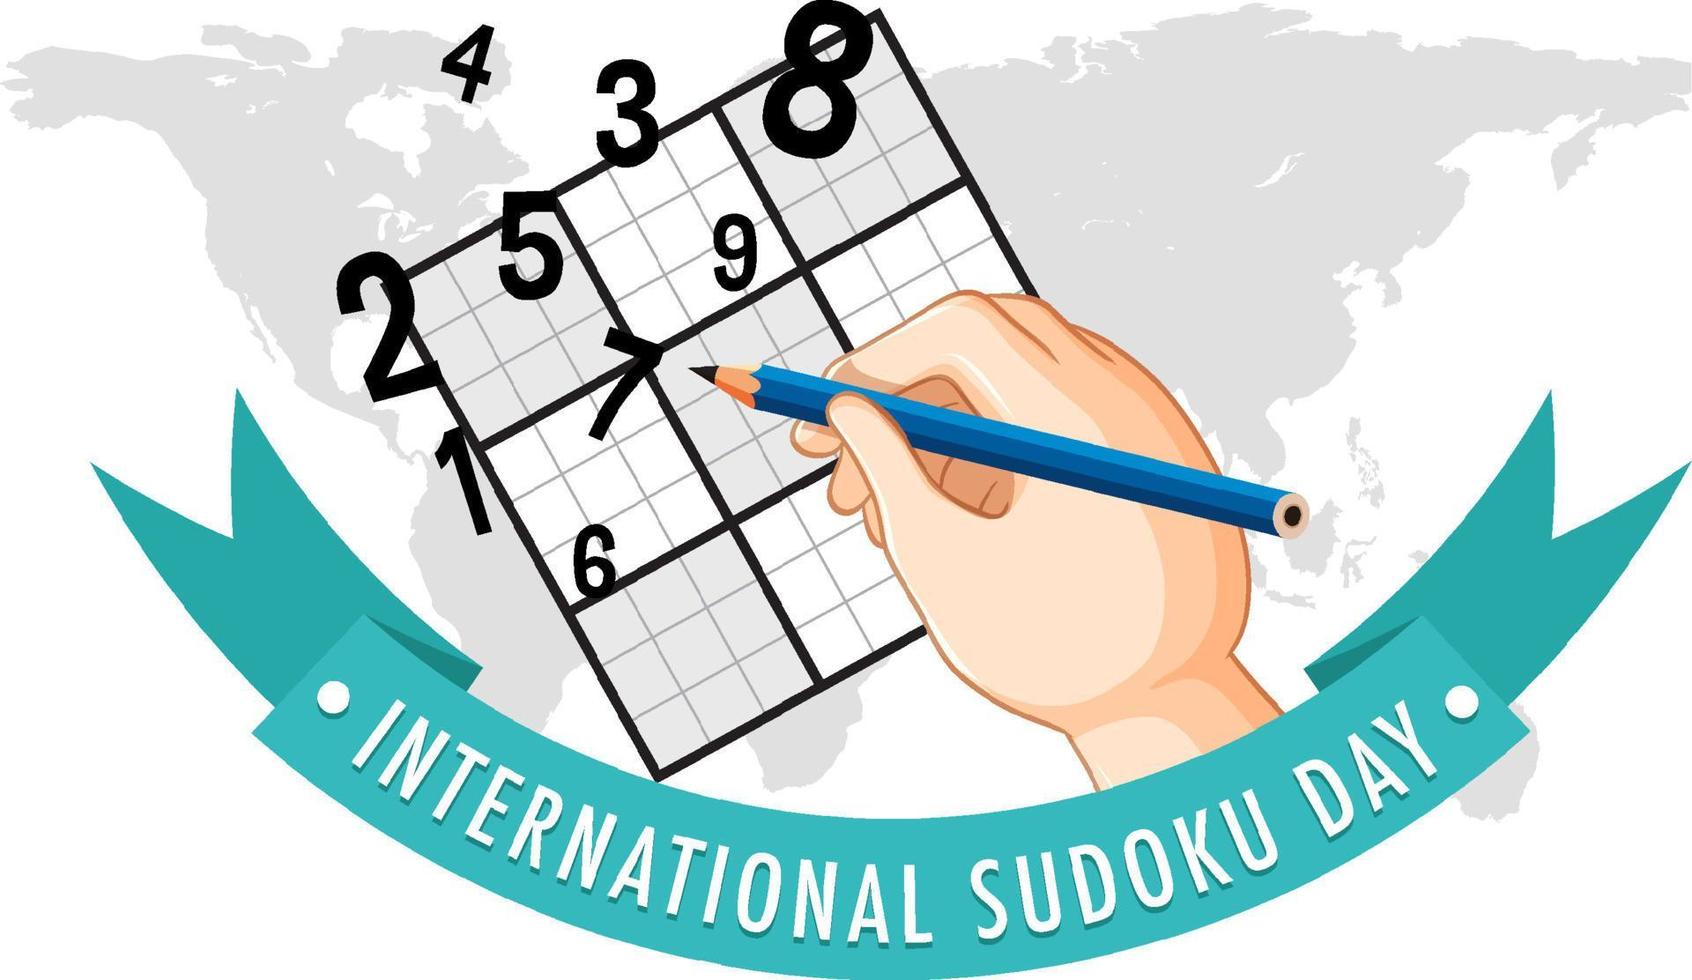 International Sudoku Day Poster Template vector